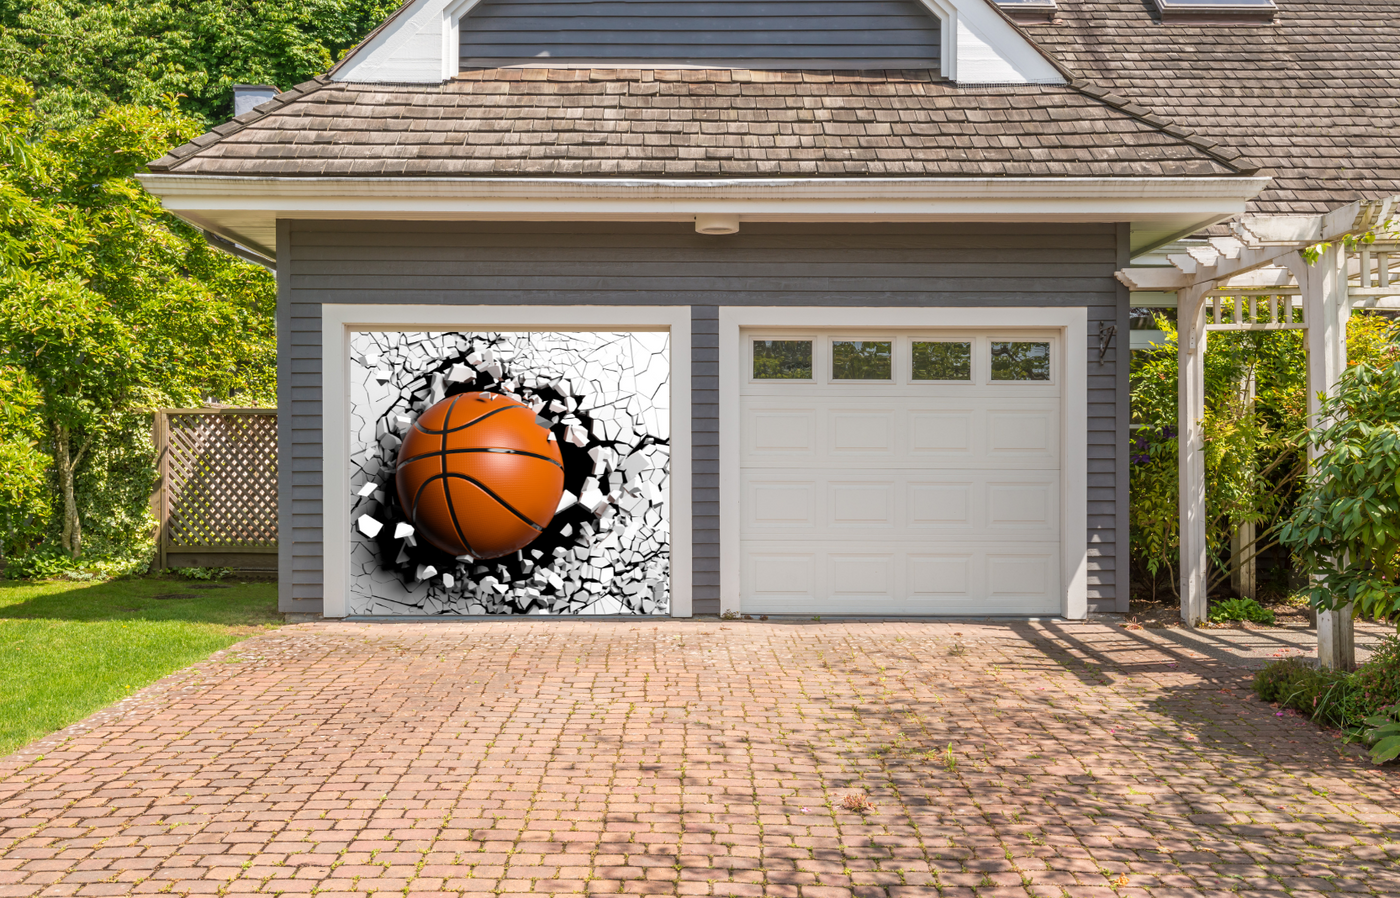 Basketball Breaking White Wall Garage Door Cover Banner Backdrop